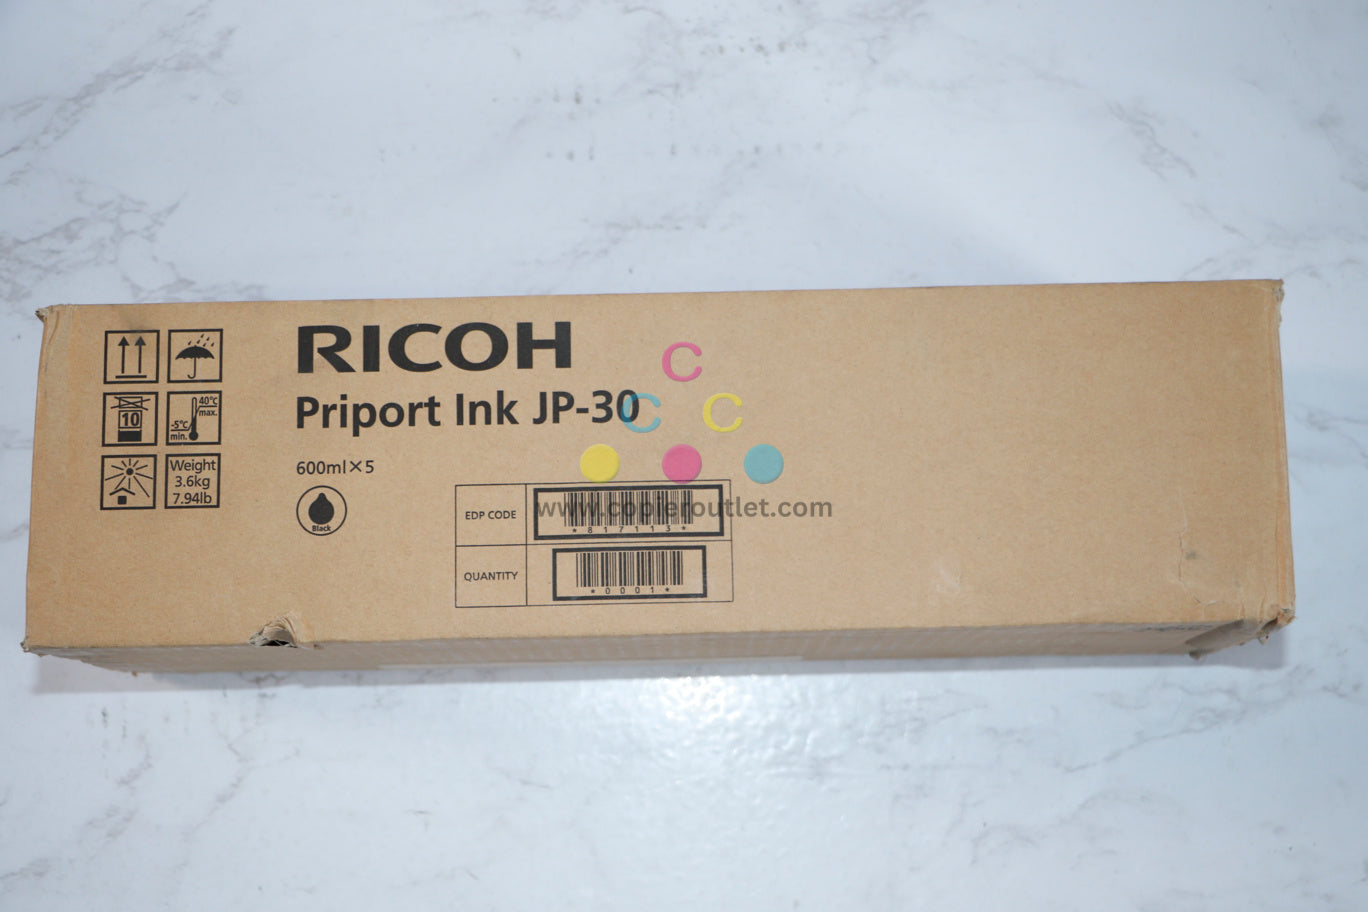 New OEM Ricoh DD3334,DX3340,DX3343 Black Ink JP-30 / 817113 (Box of 5 Inks)